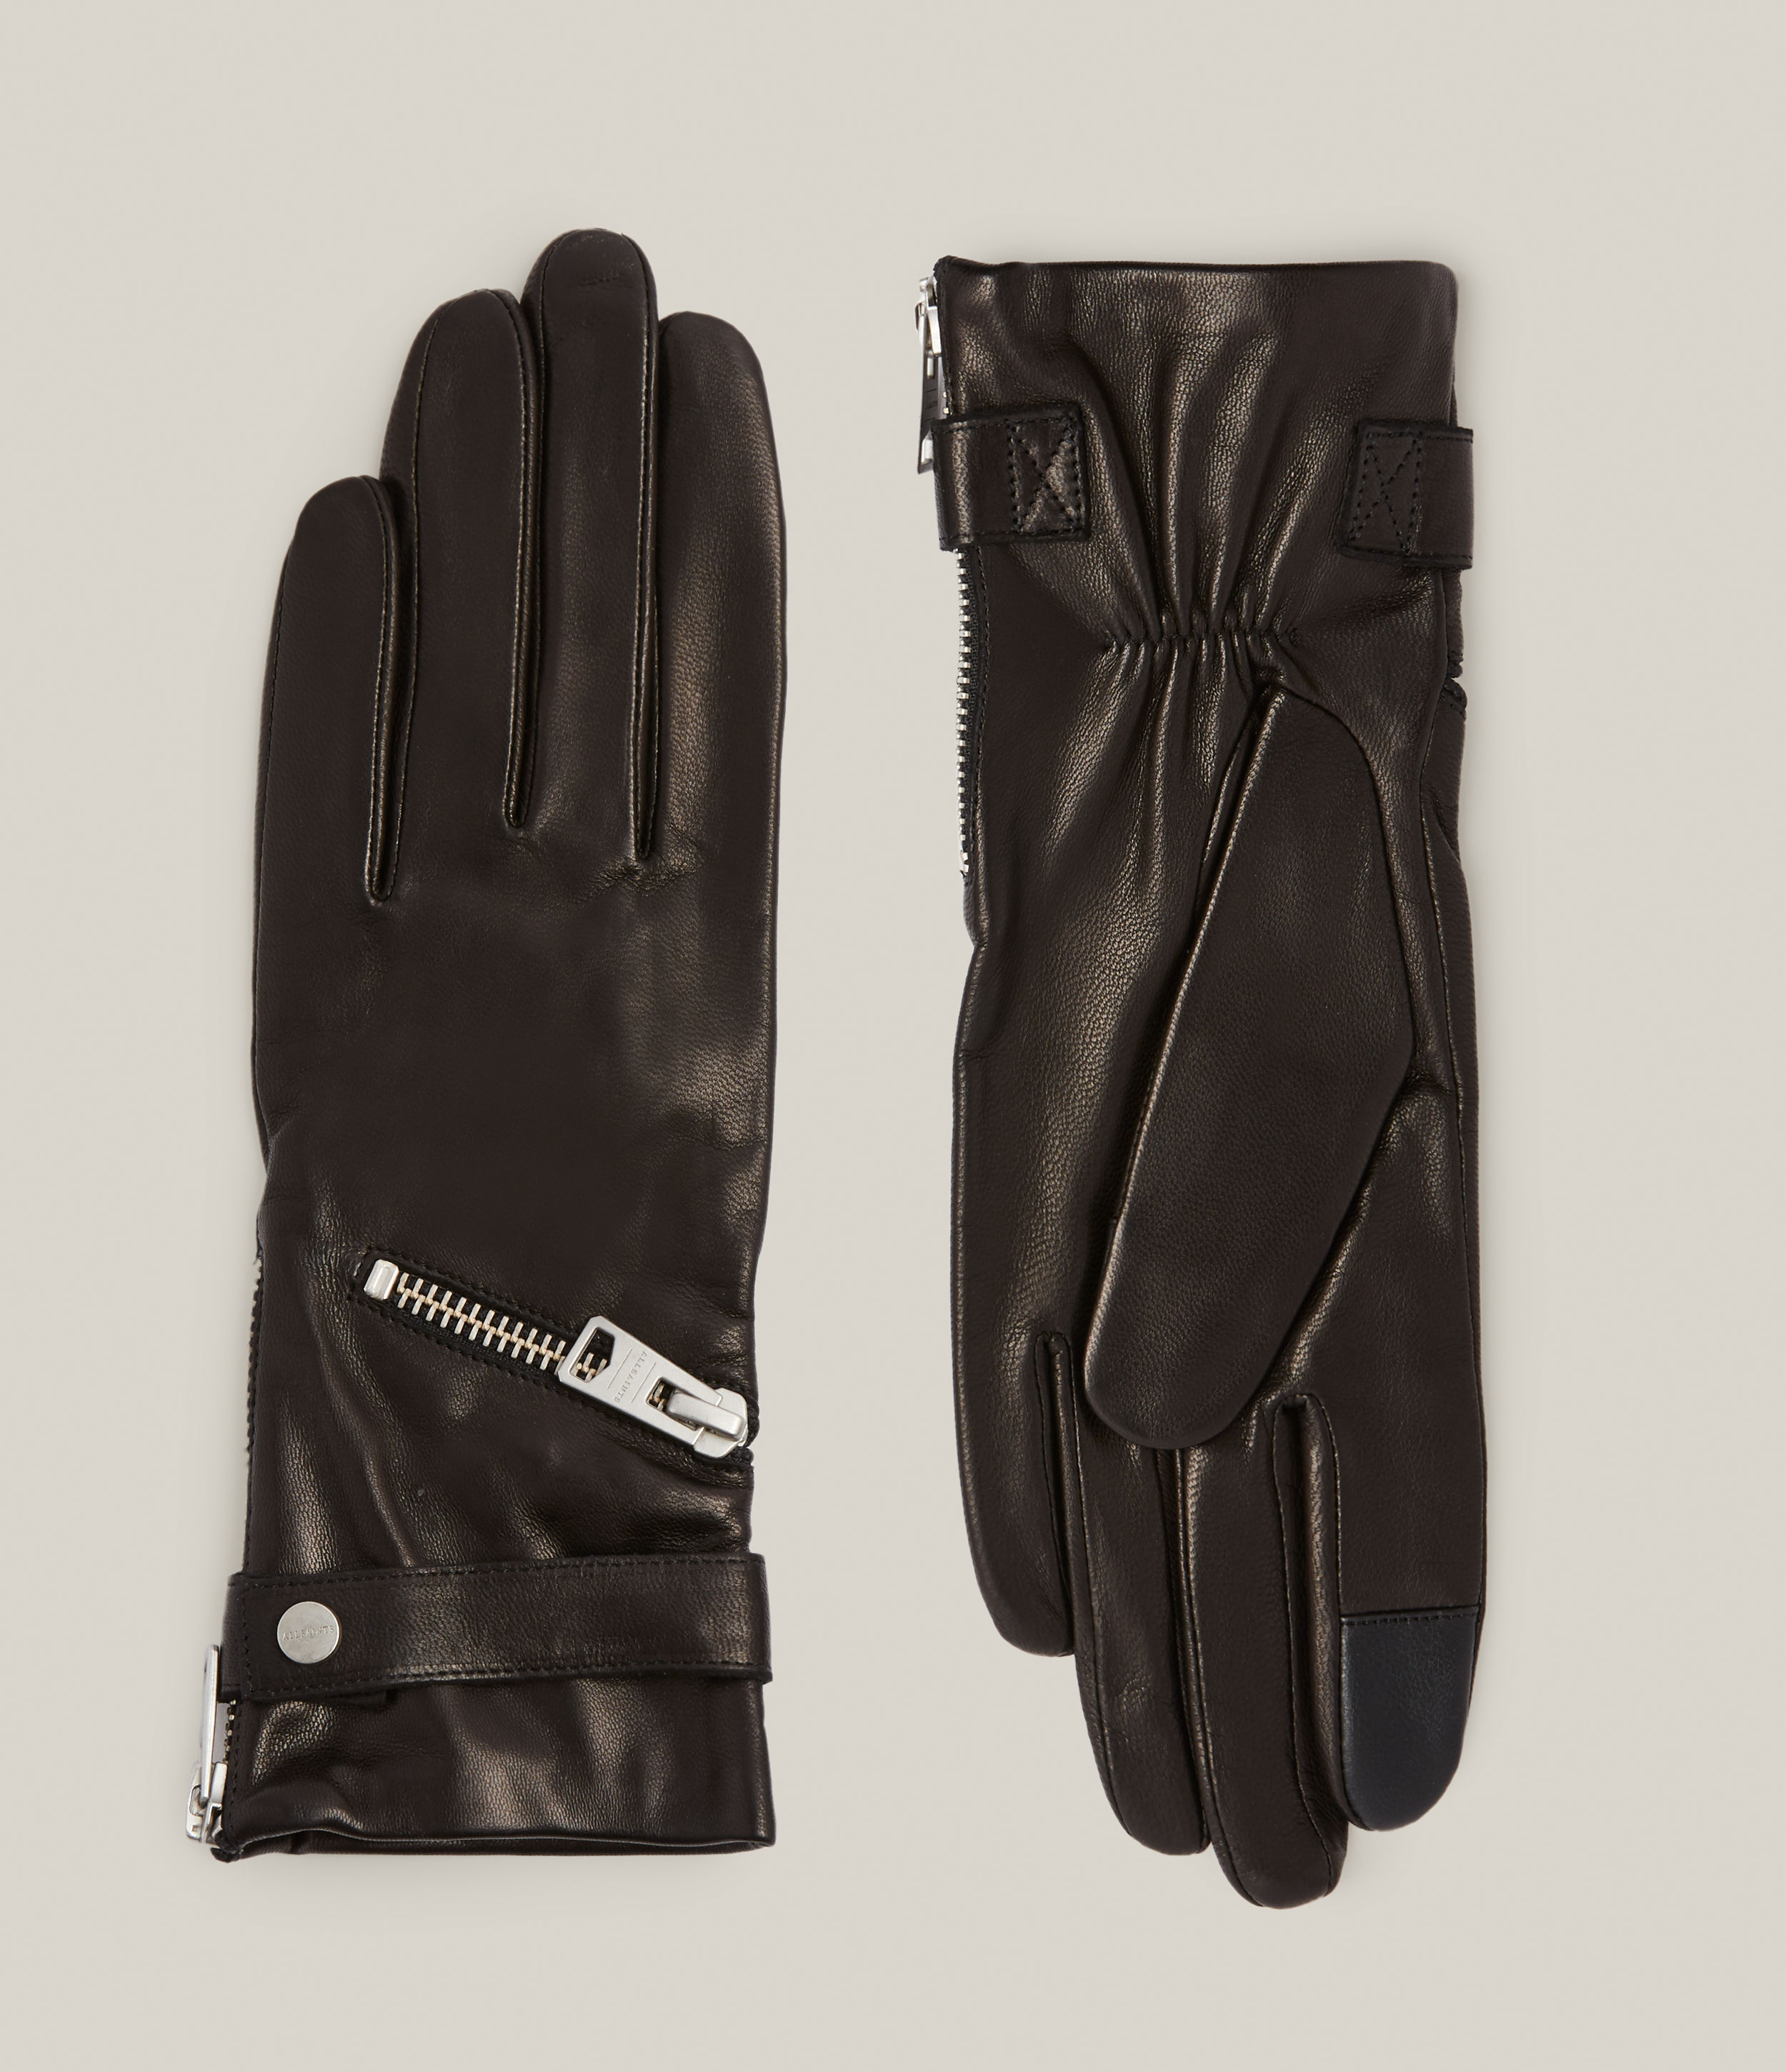 AllSaints Women's Elise Leather Gloves, Black/dull Nickel, Size: S